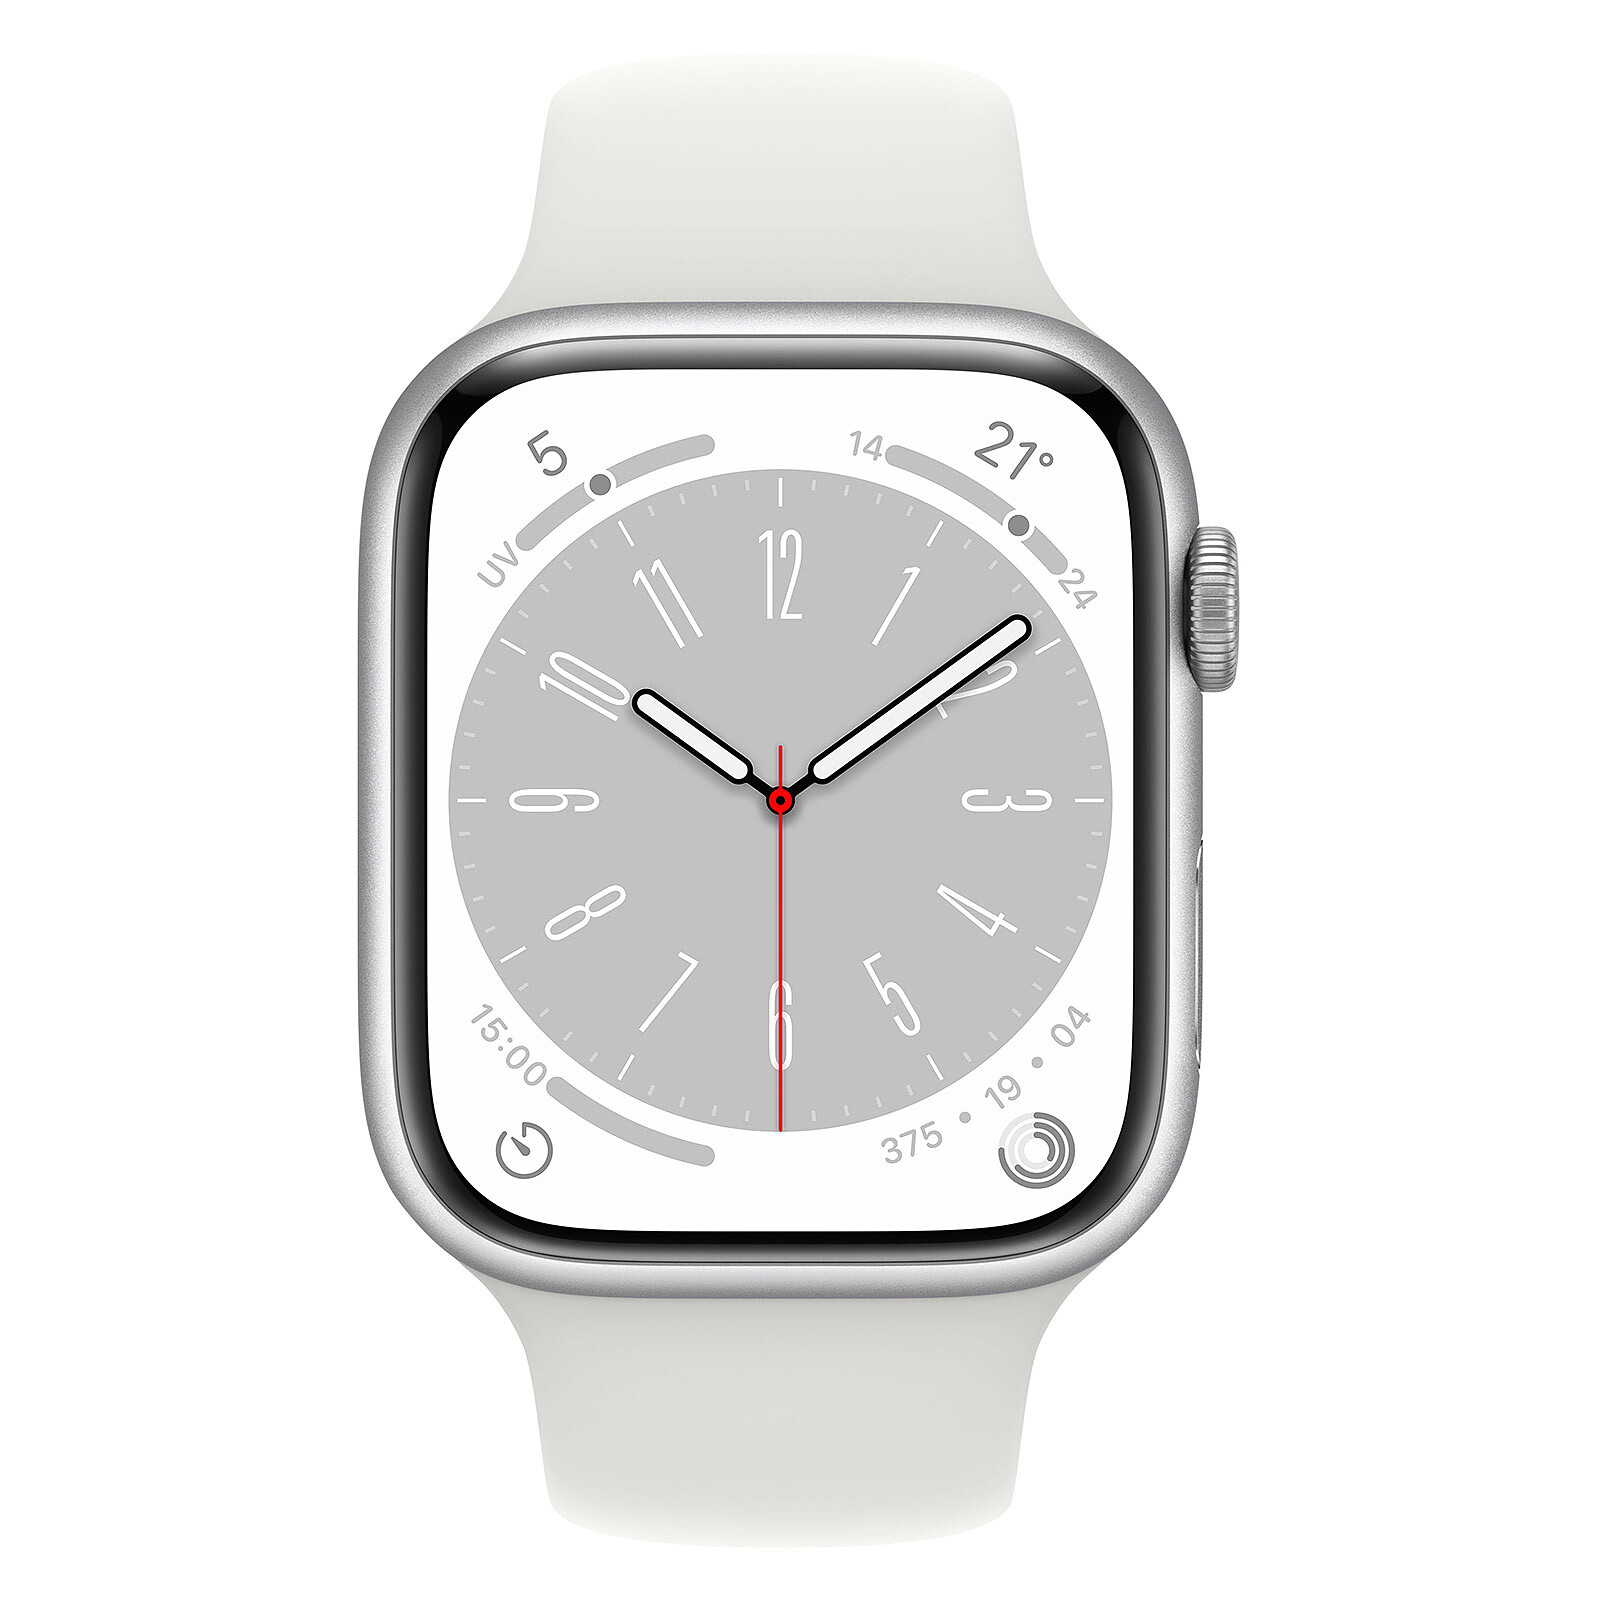 Apple Watch Series 7 [GPS 45mm] Smart Watch w/Starlight Aluminum Case with  Starlight Sport Band. Fitness Tracker, Blood Oxygen & ECG Apps, Always-On